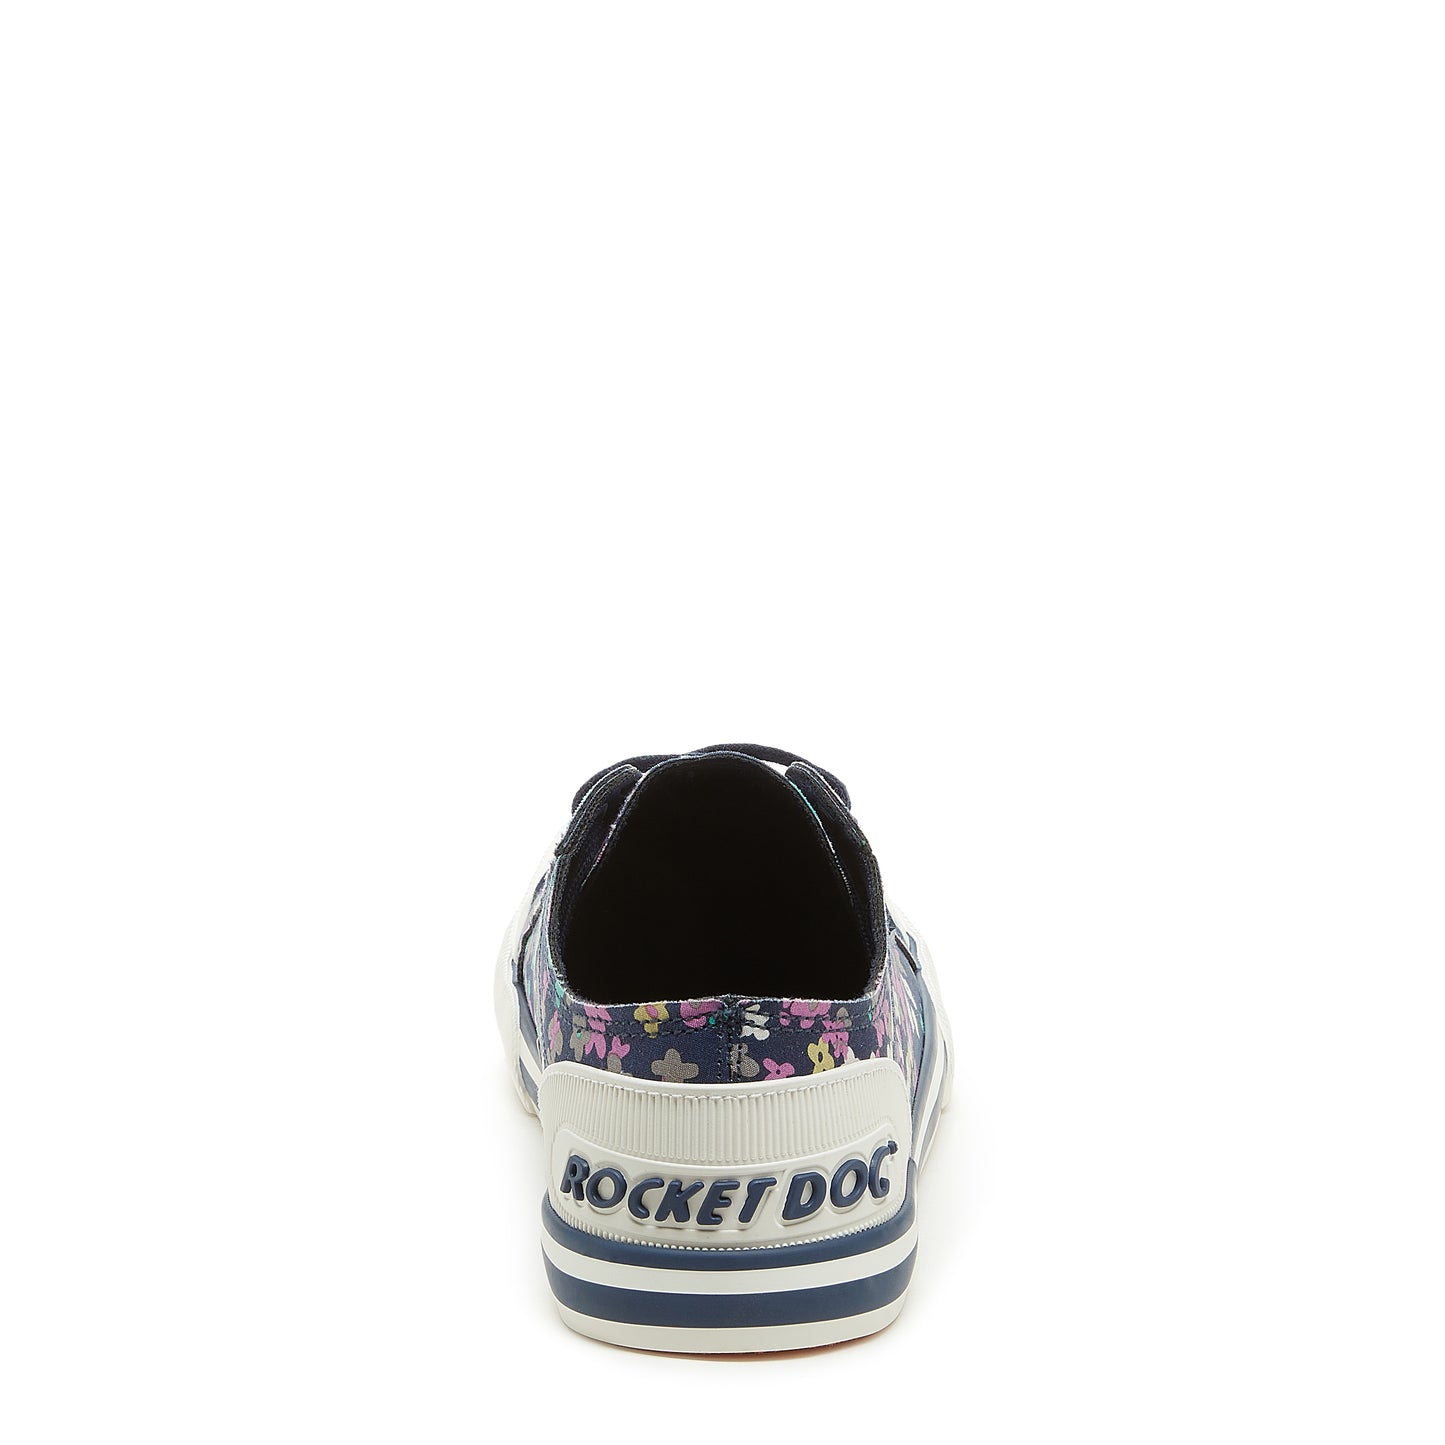 Rocket Dog® Jazzin Navy Floral Sneaker